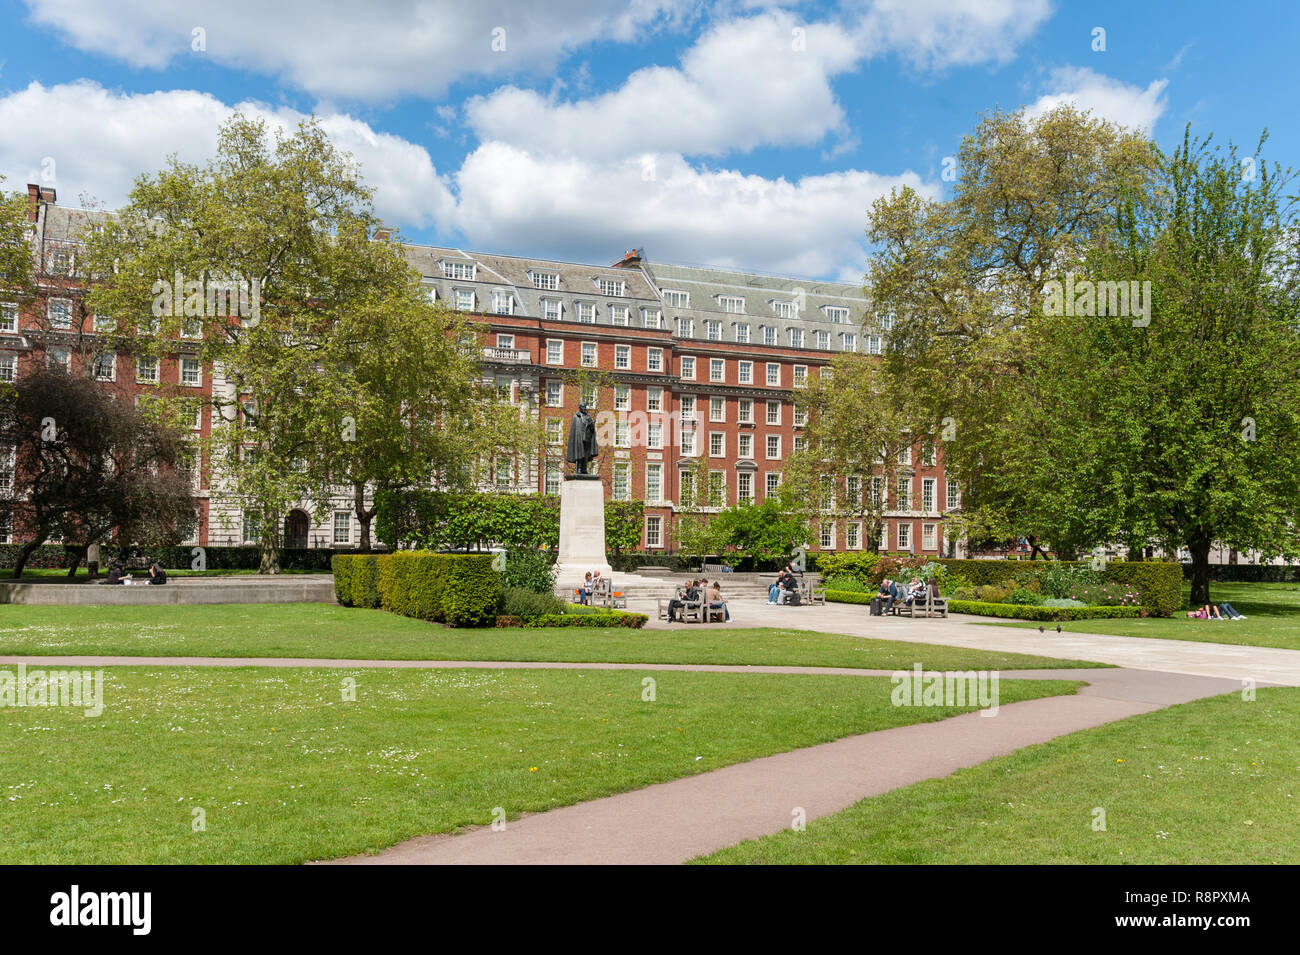 Grosvenor Square, Mayfair, London, UK Banque D'Images